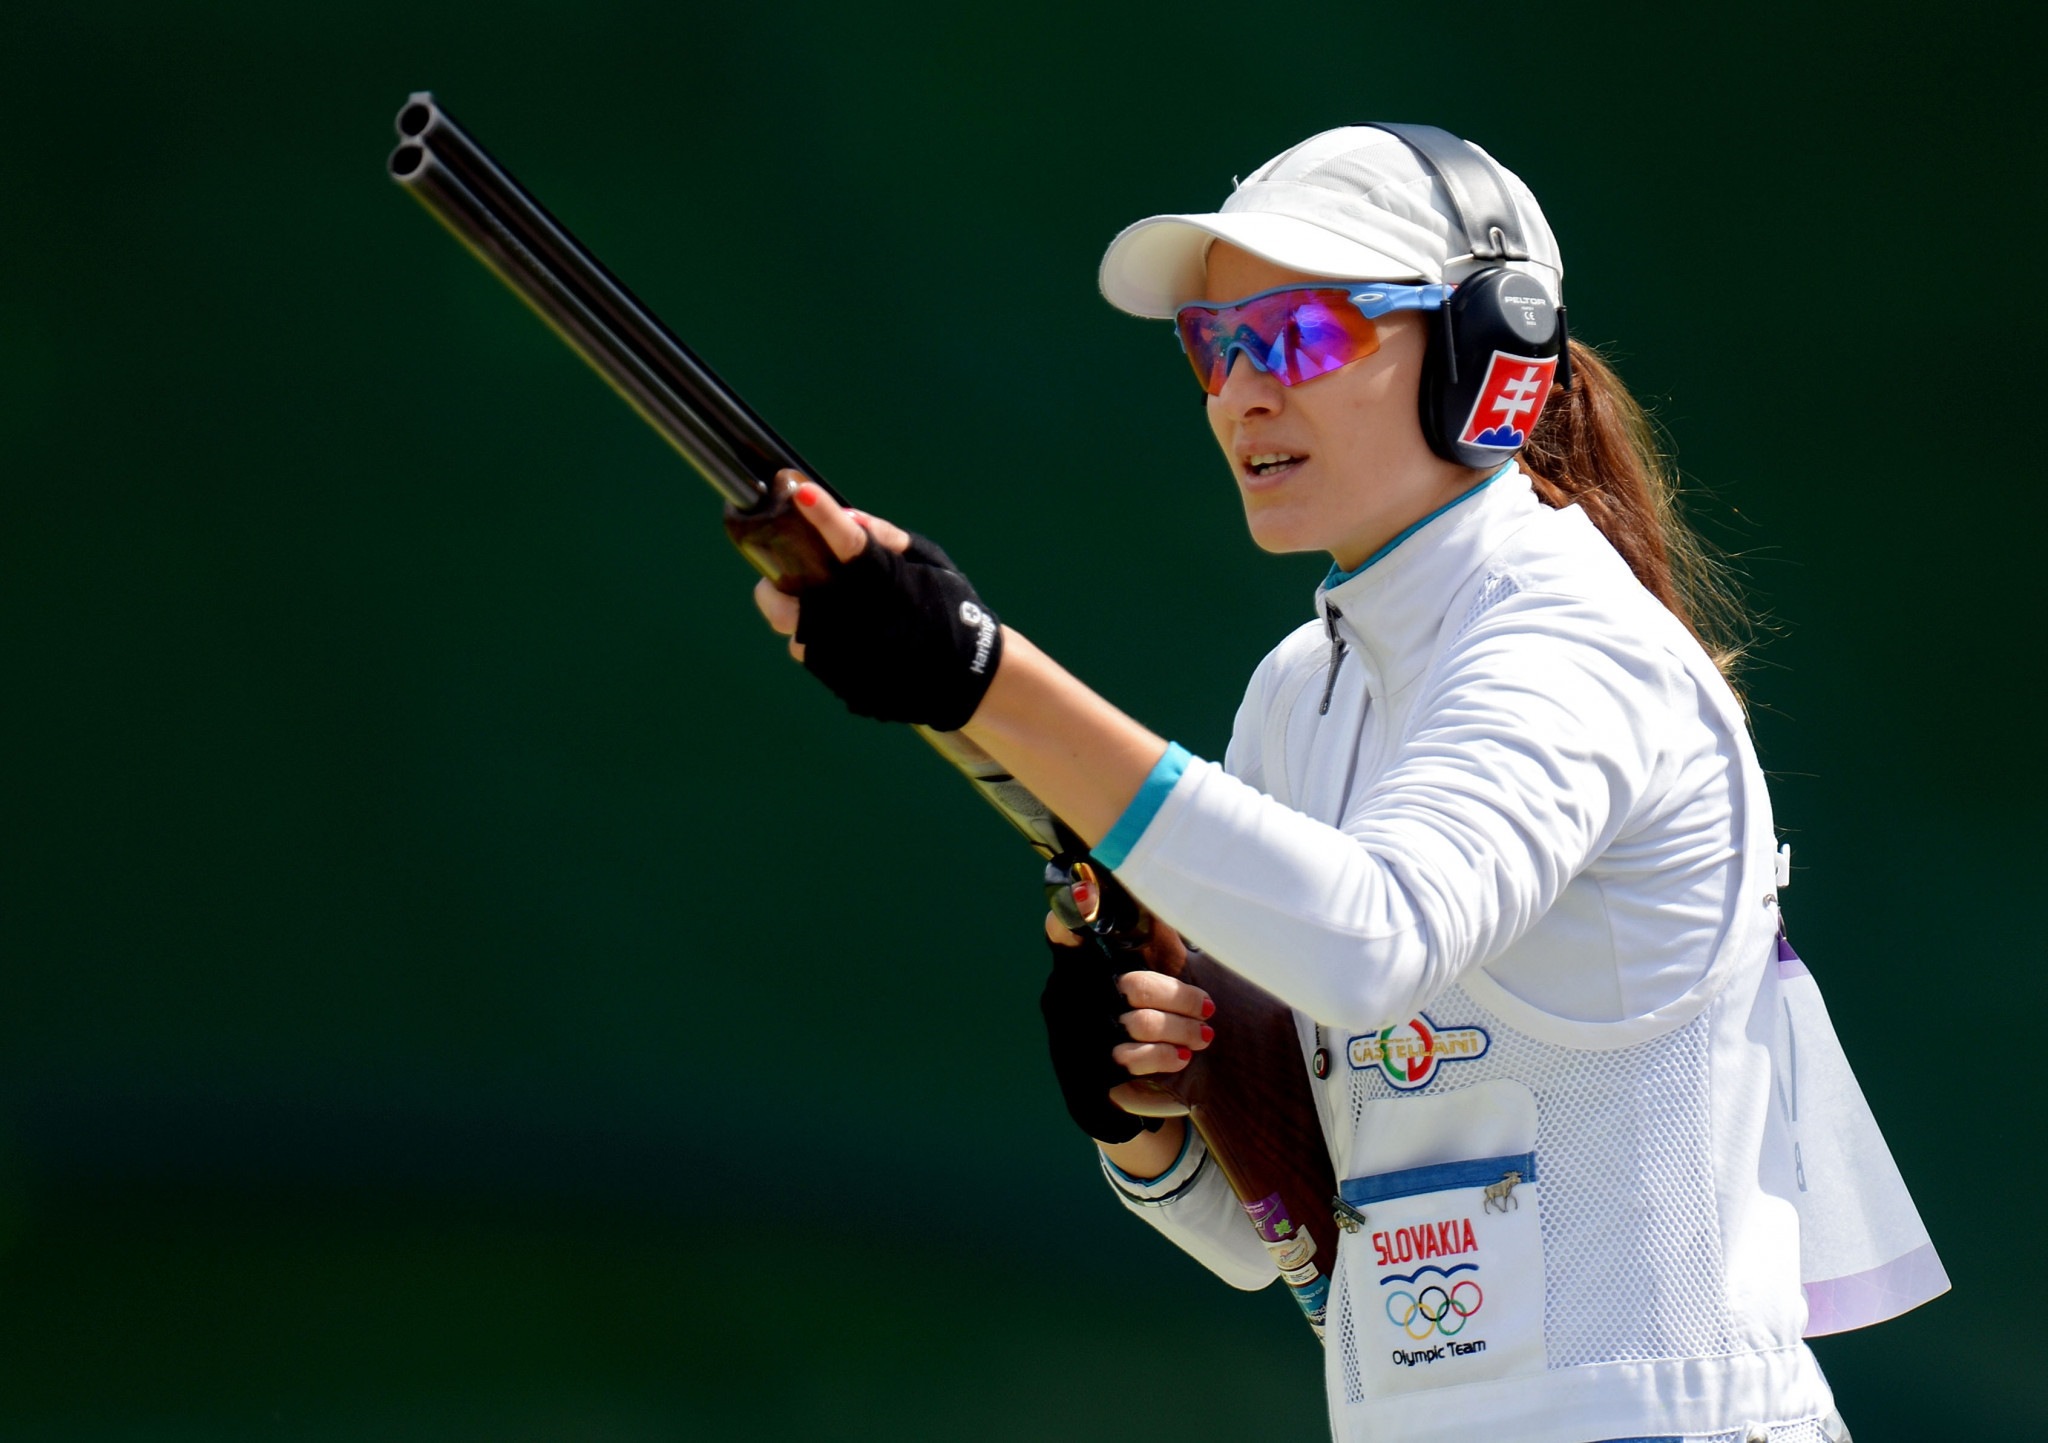 Barteková sets sights on shooting inclusion at EYOF